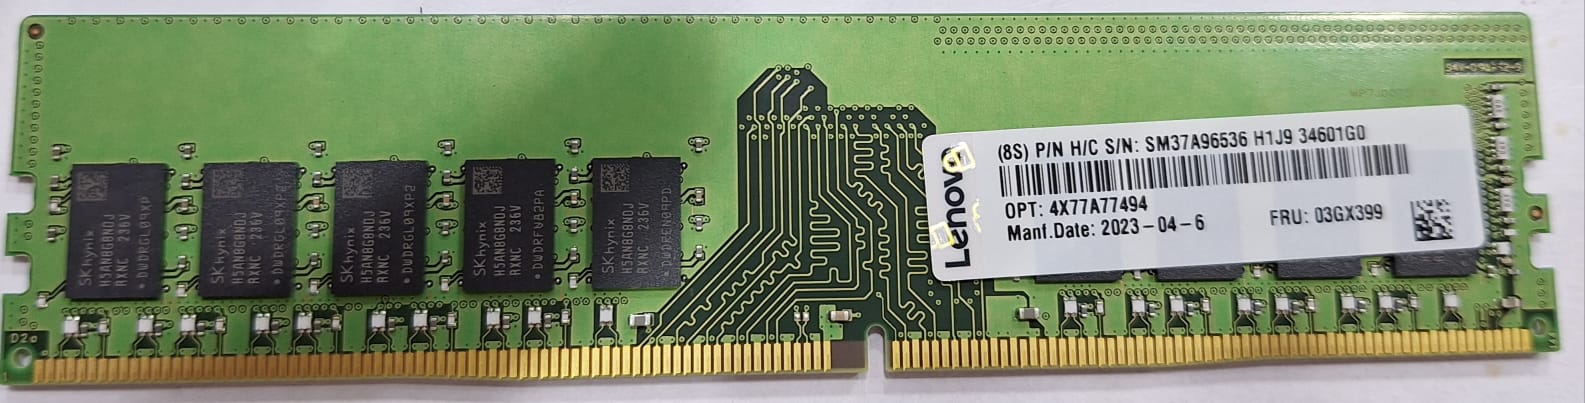 Lenovo Ram Server 8GB D4 3200Mhz TruDDR4 UDIMM